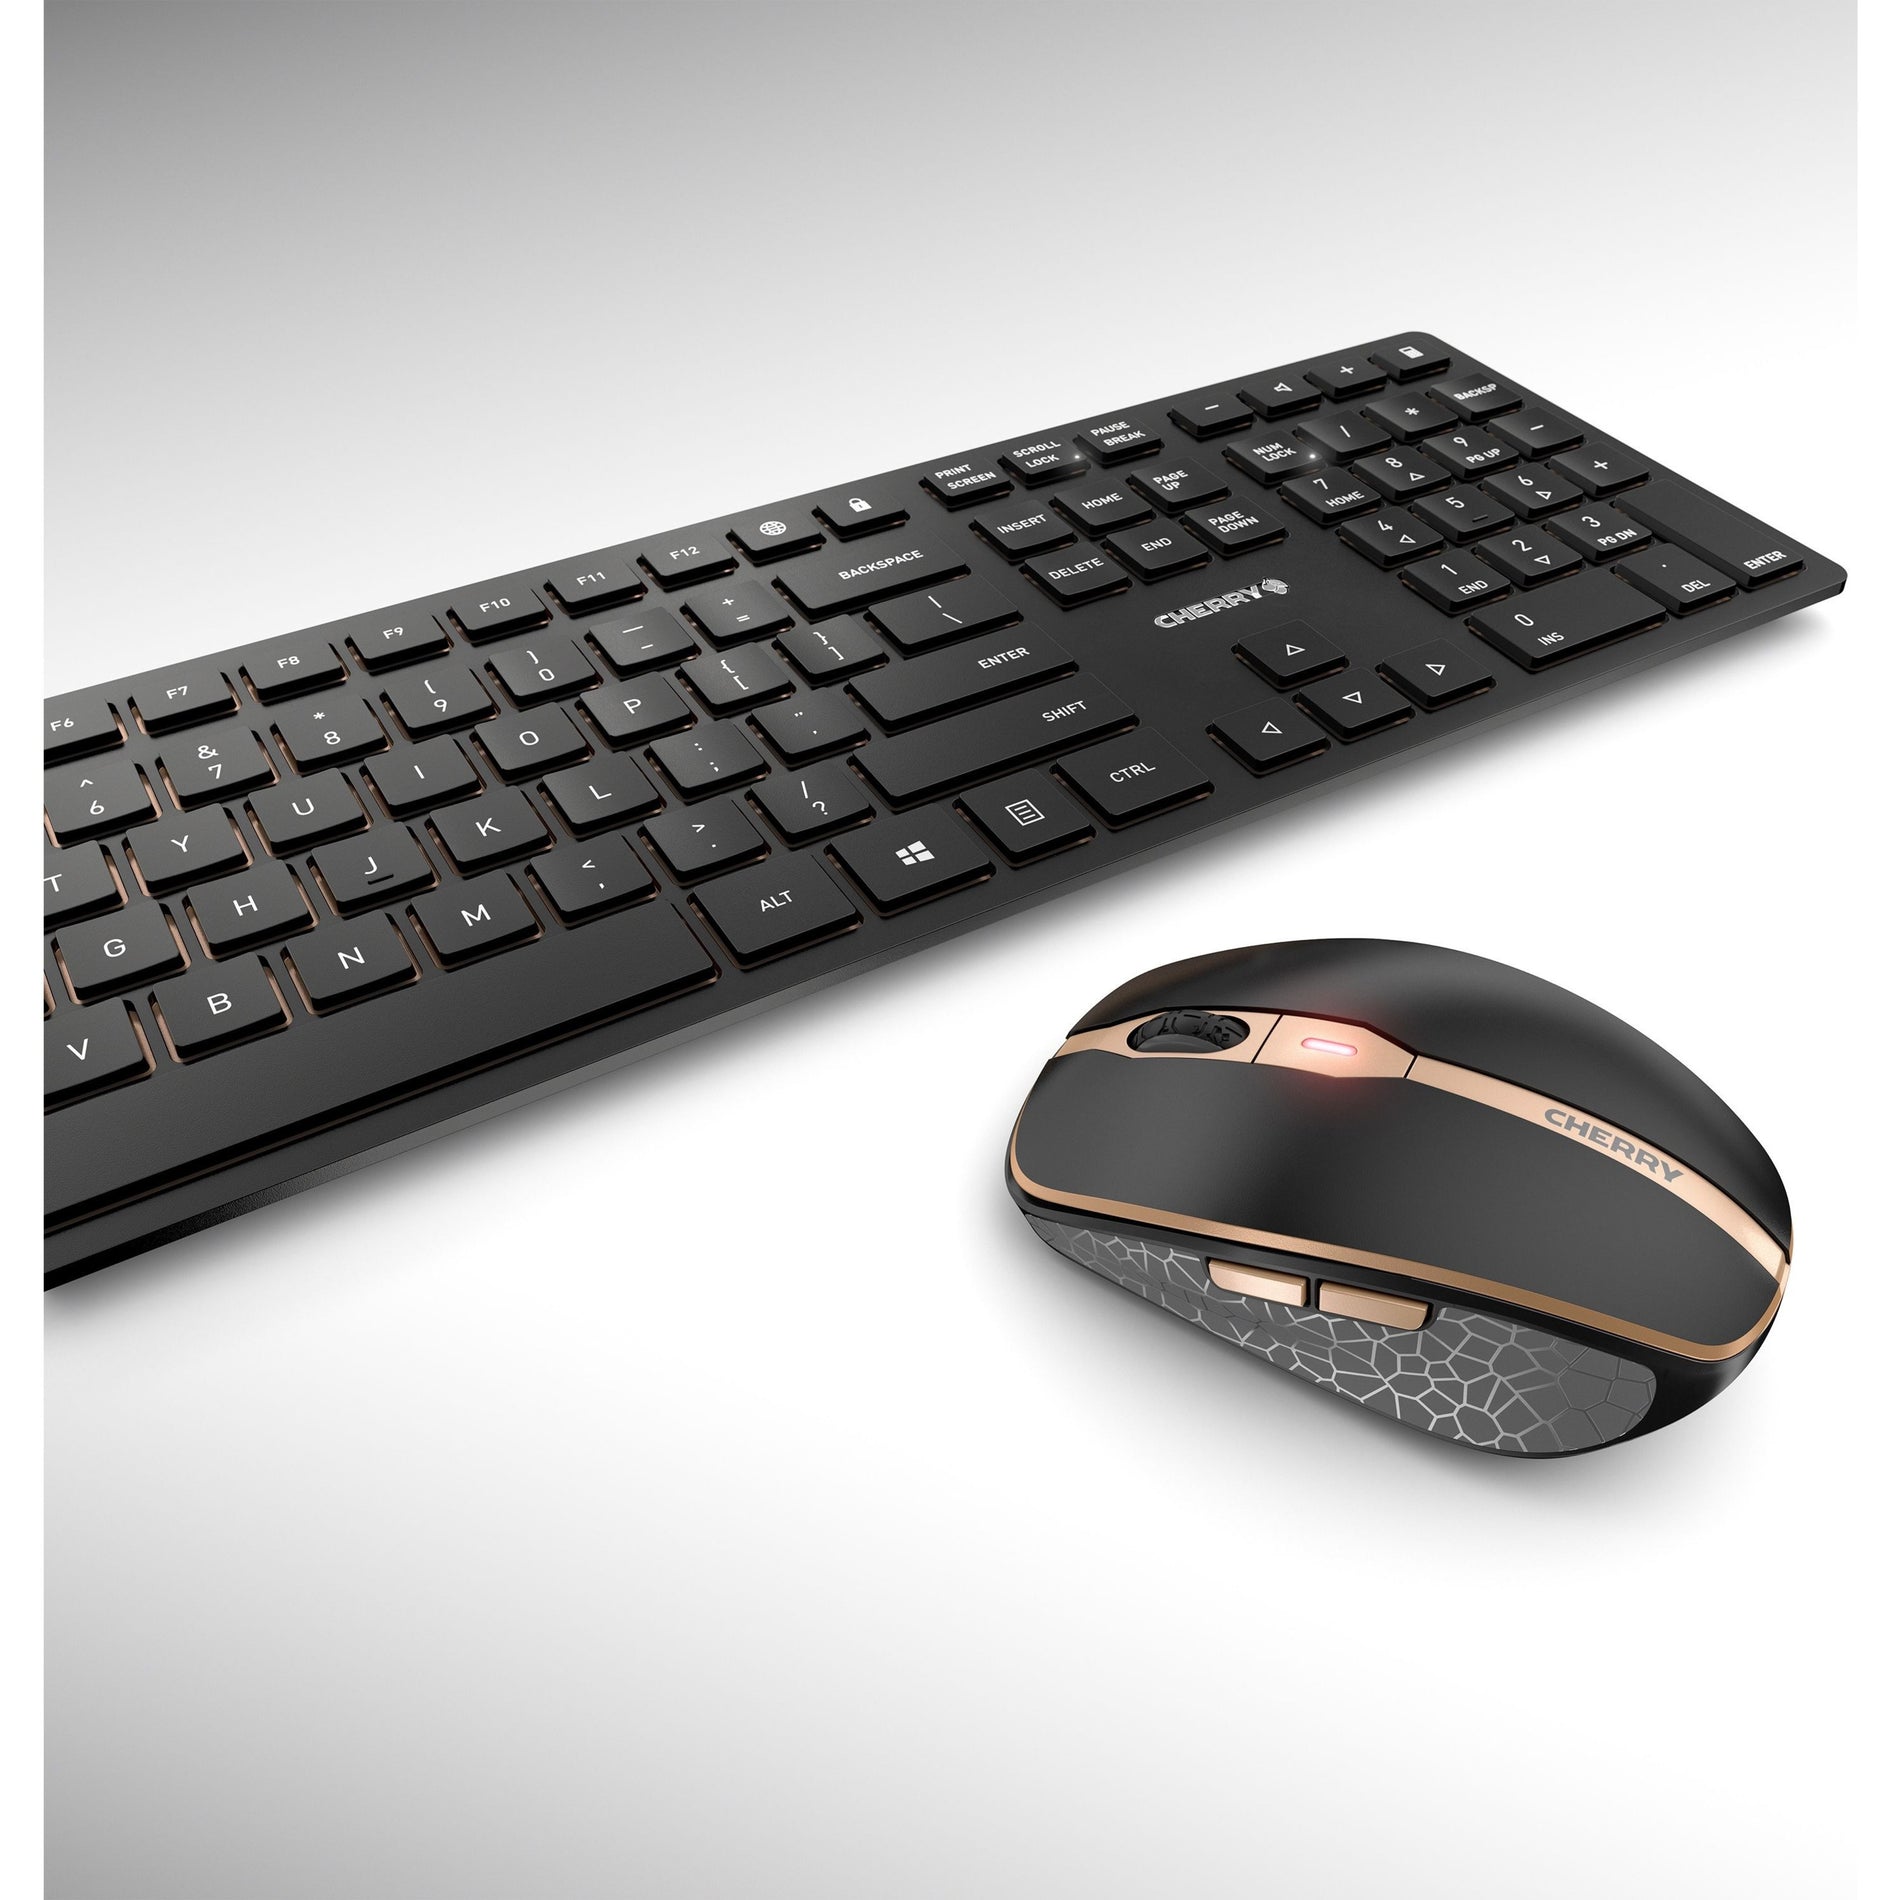 CHERRY JD-9100US-2 DW 9100 SLIM Rechargeable Wireless Desktop Keyboard & Mouse Combo, Black/Bronze, USB